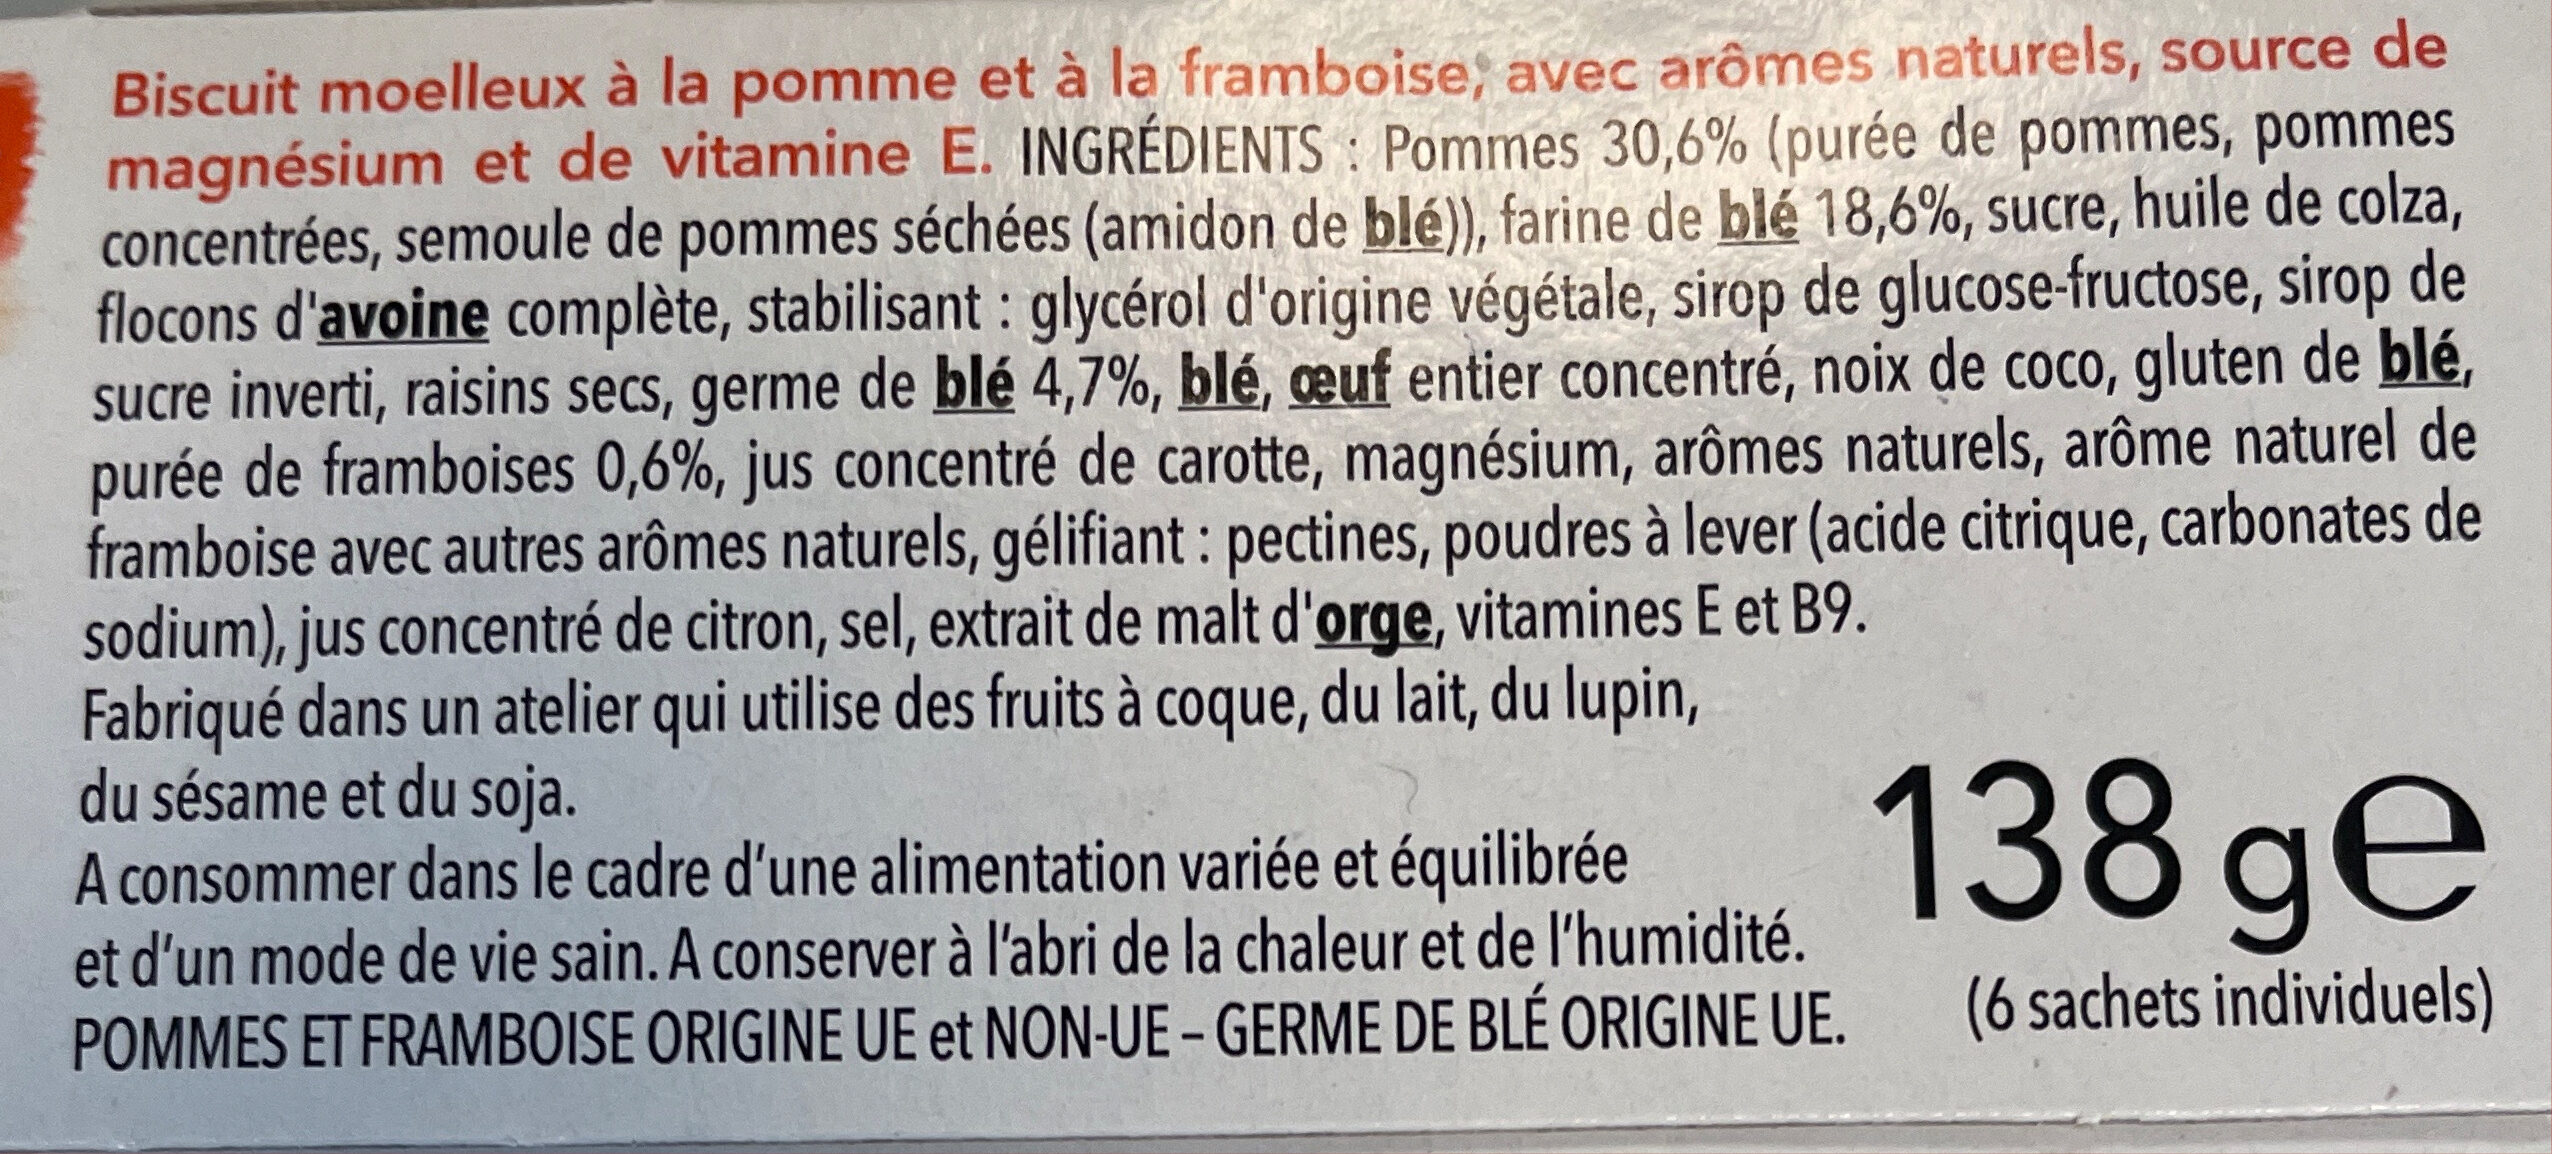 Biscuit moelleux pomme saveur framboise - Ingredienser - fr